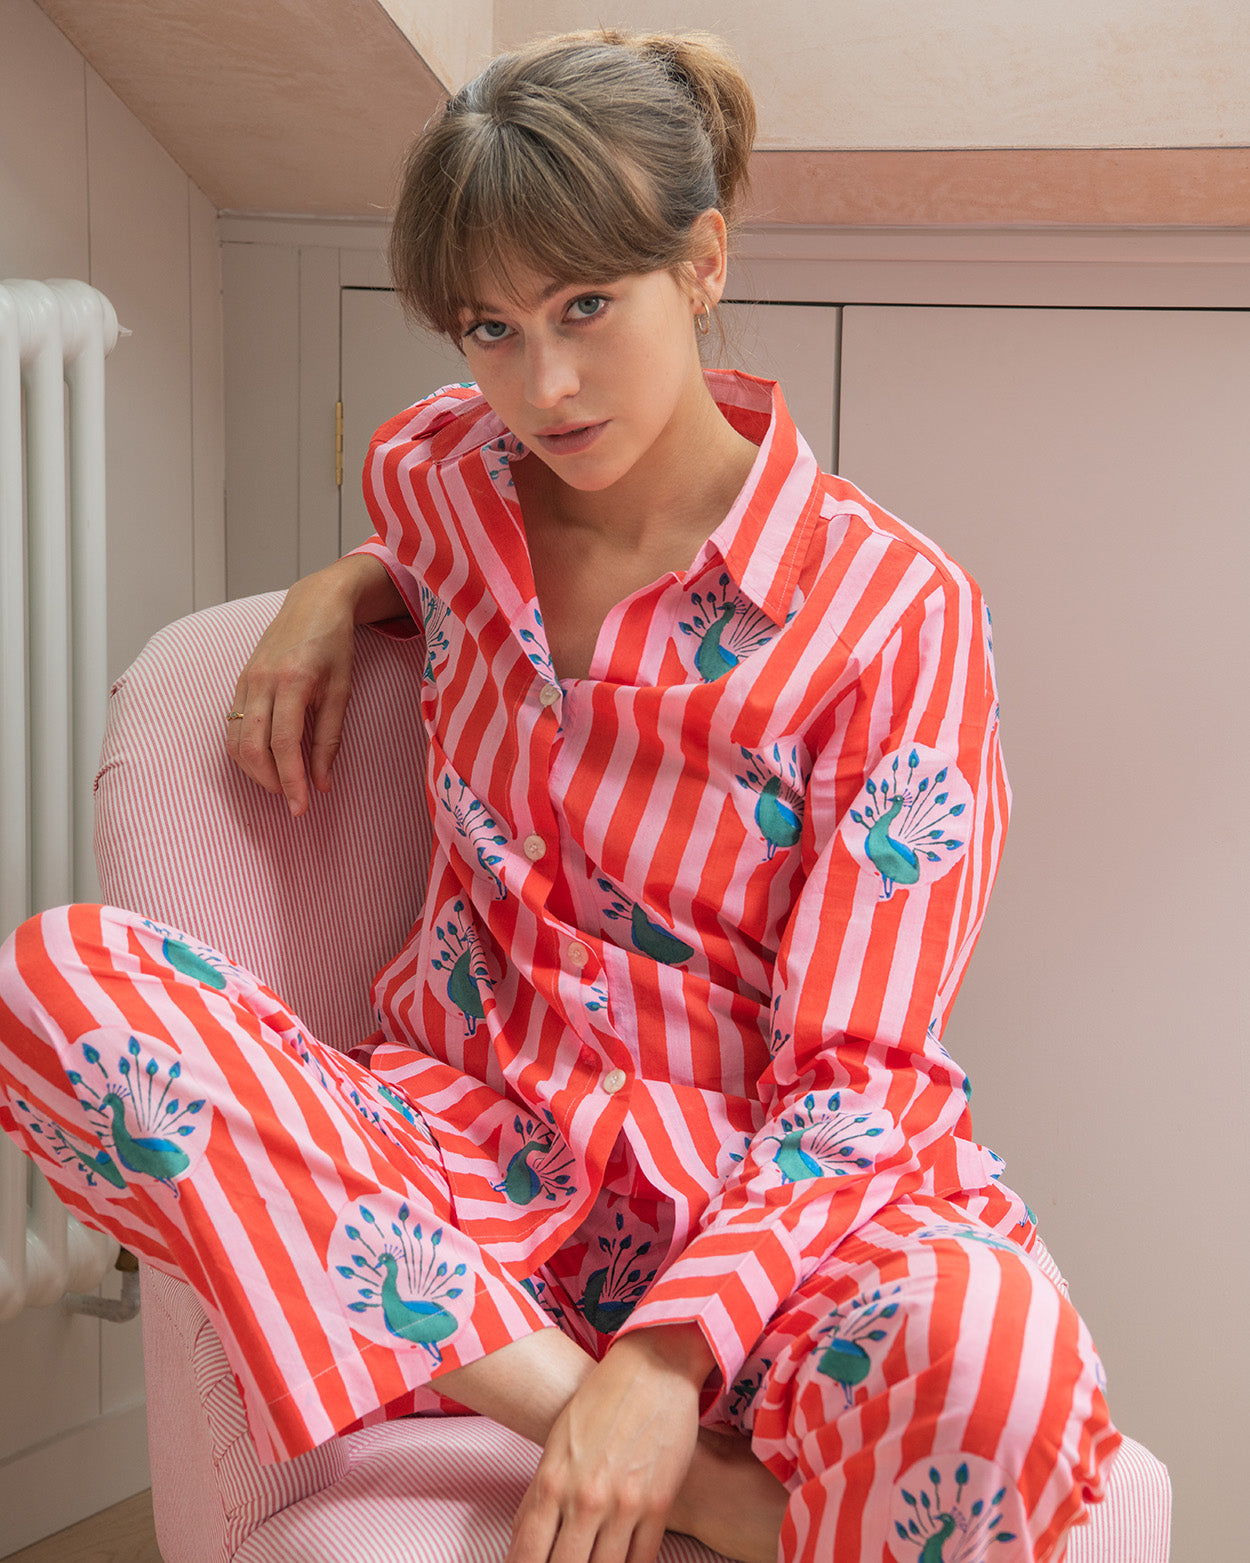 5XL Velvet 2PCS Warm Pajamas Sets Ladies' Pyjamas Sleepwear